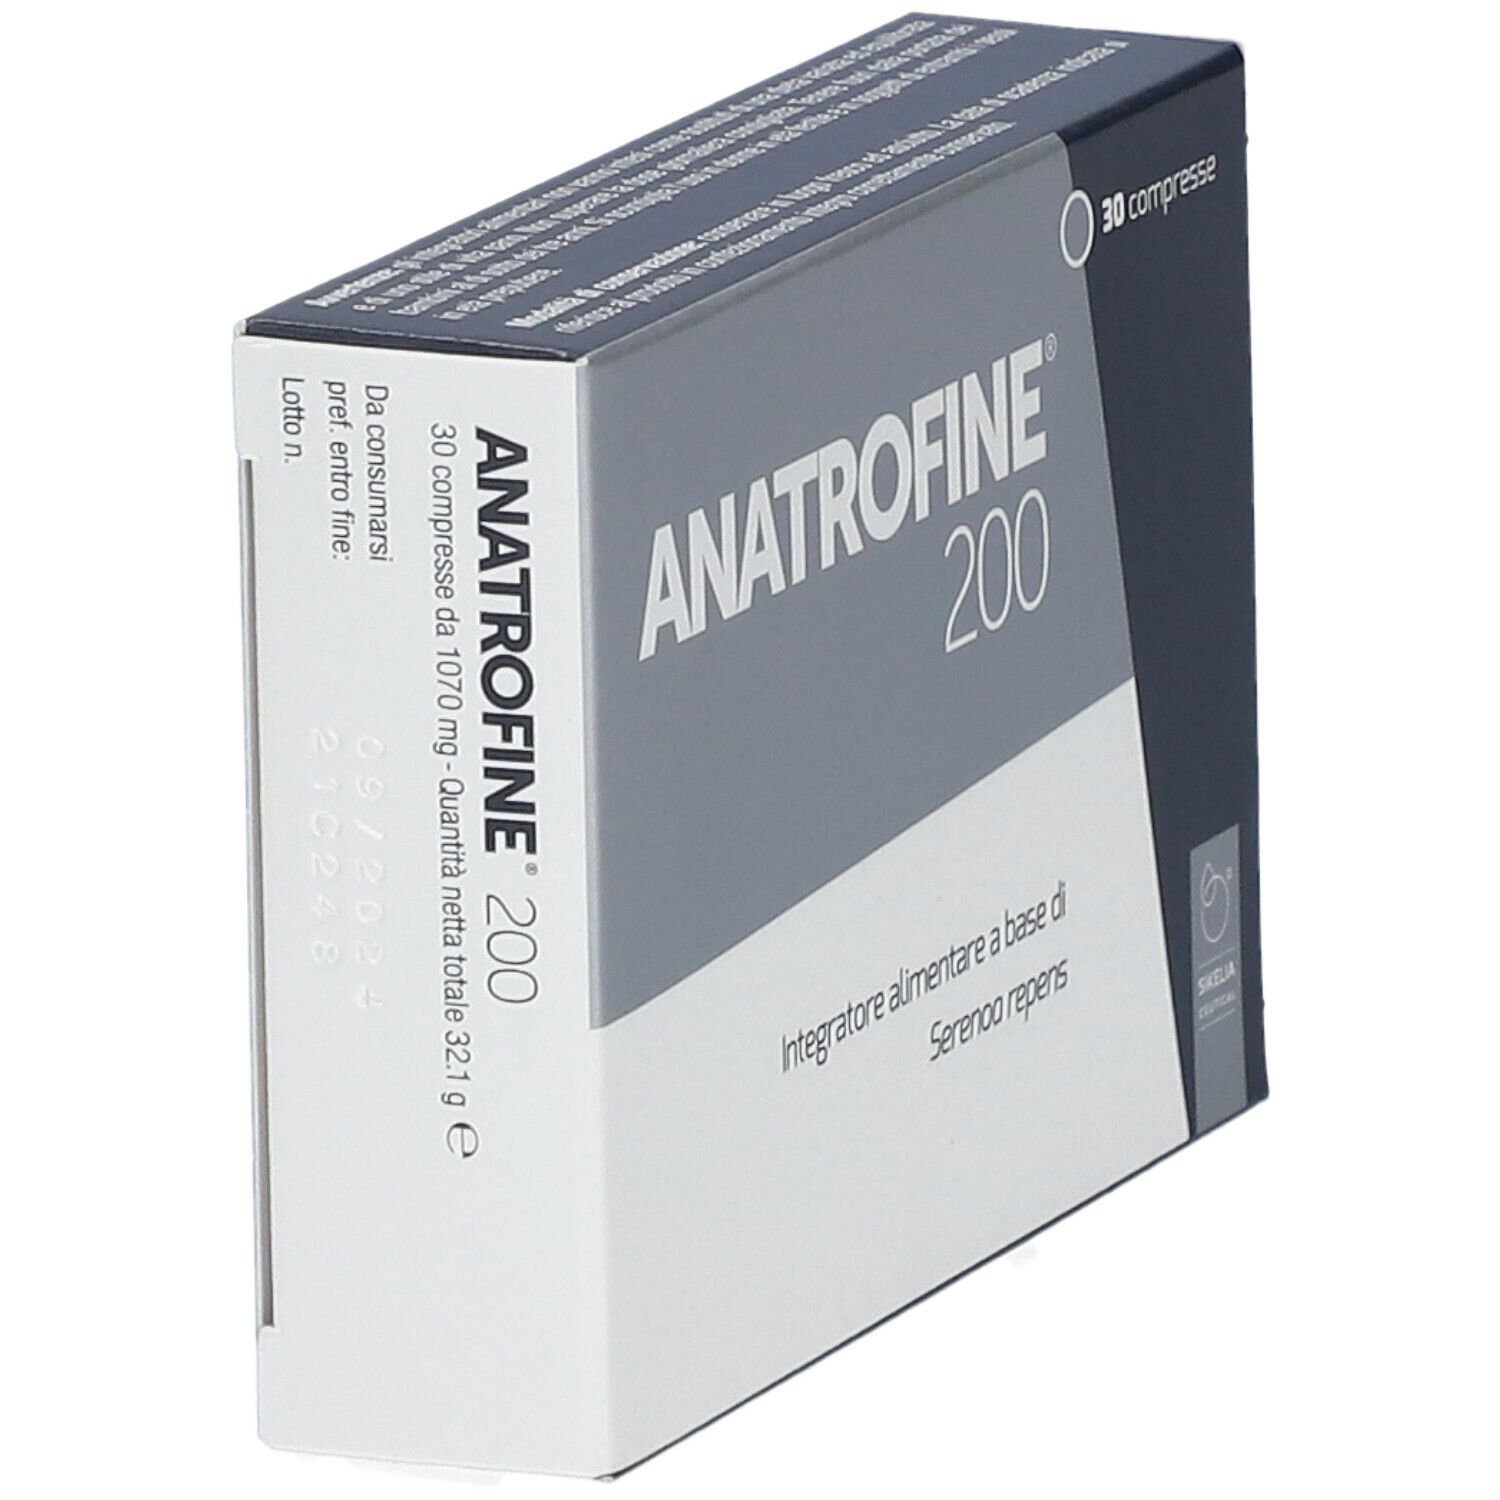 ANATROFINE® 200